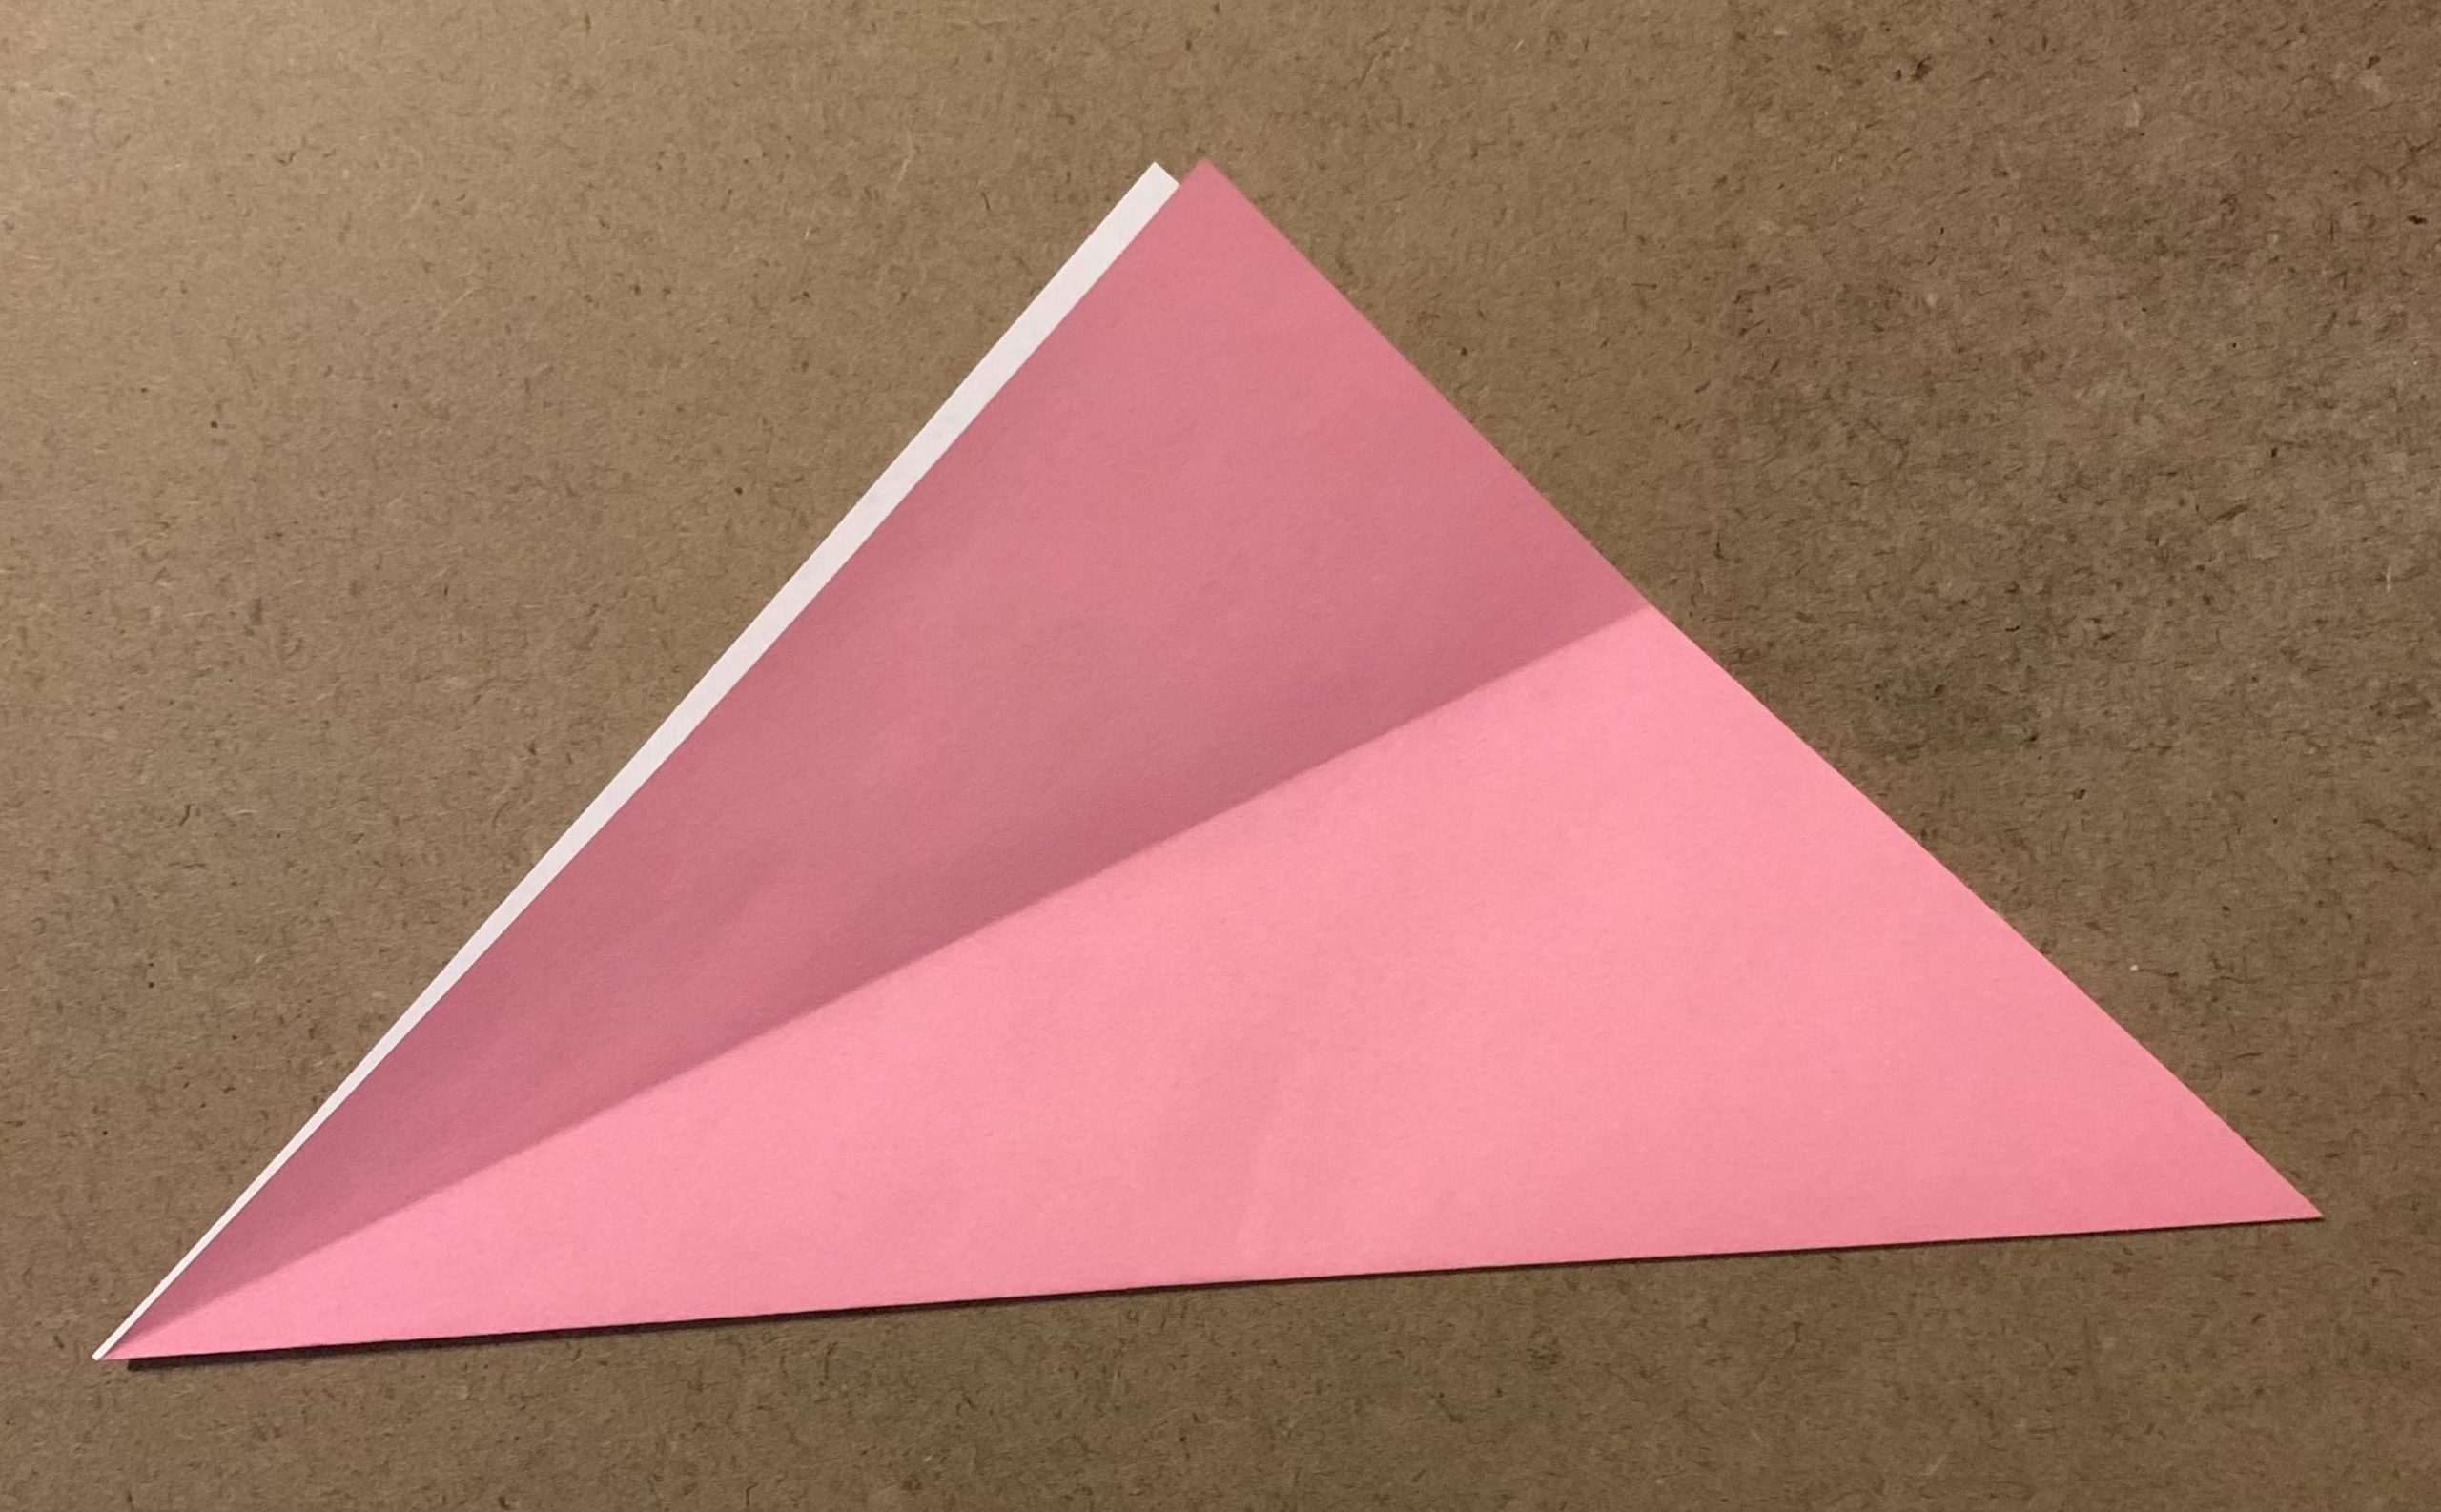 diagonal crease on triangle